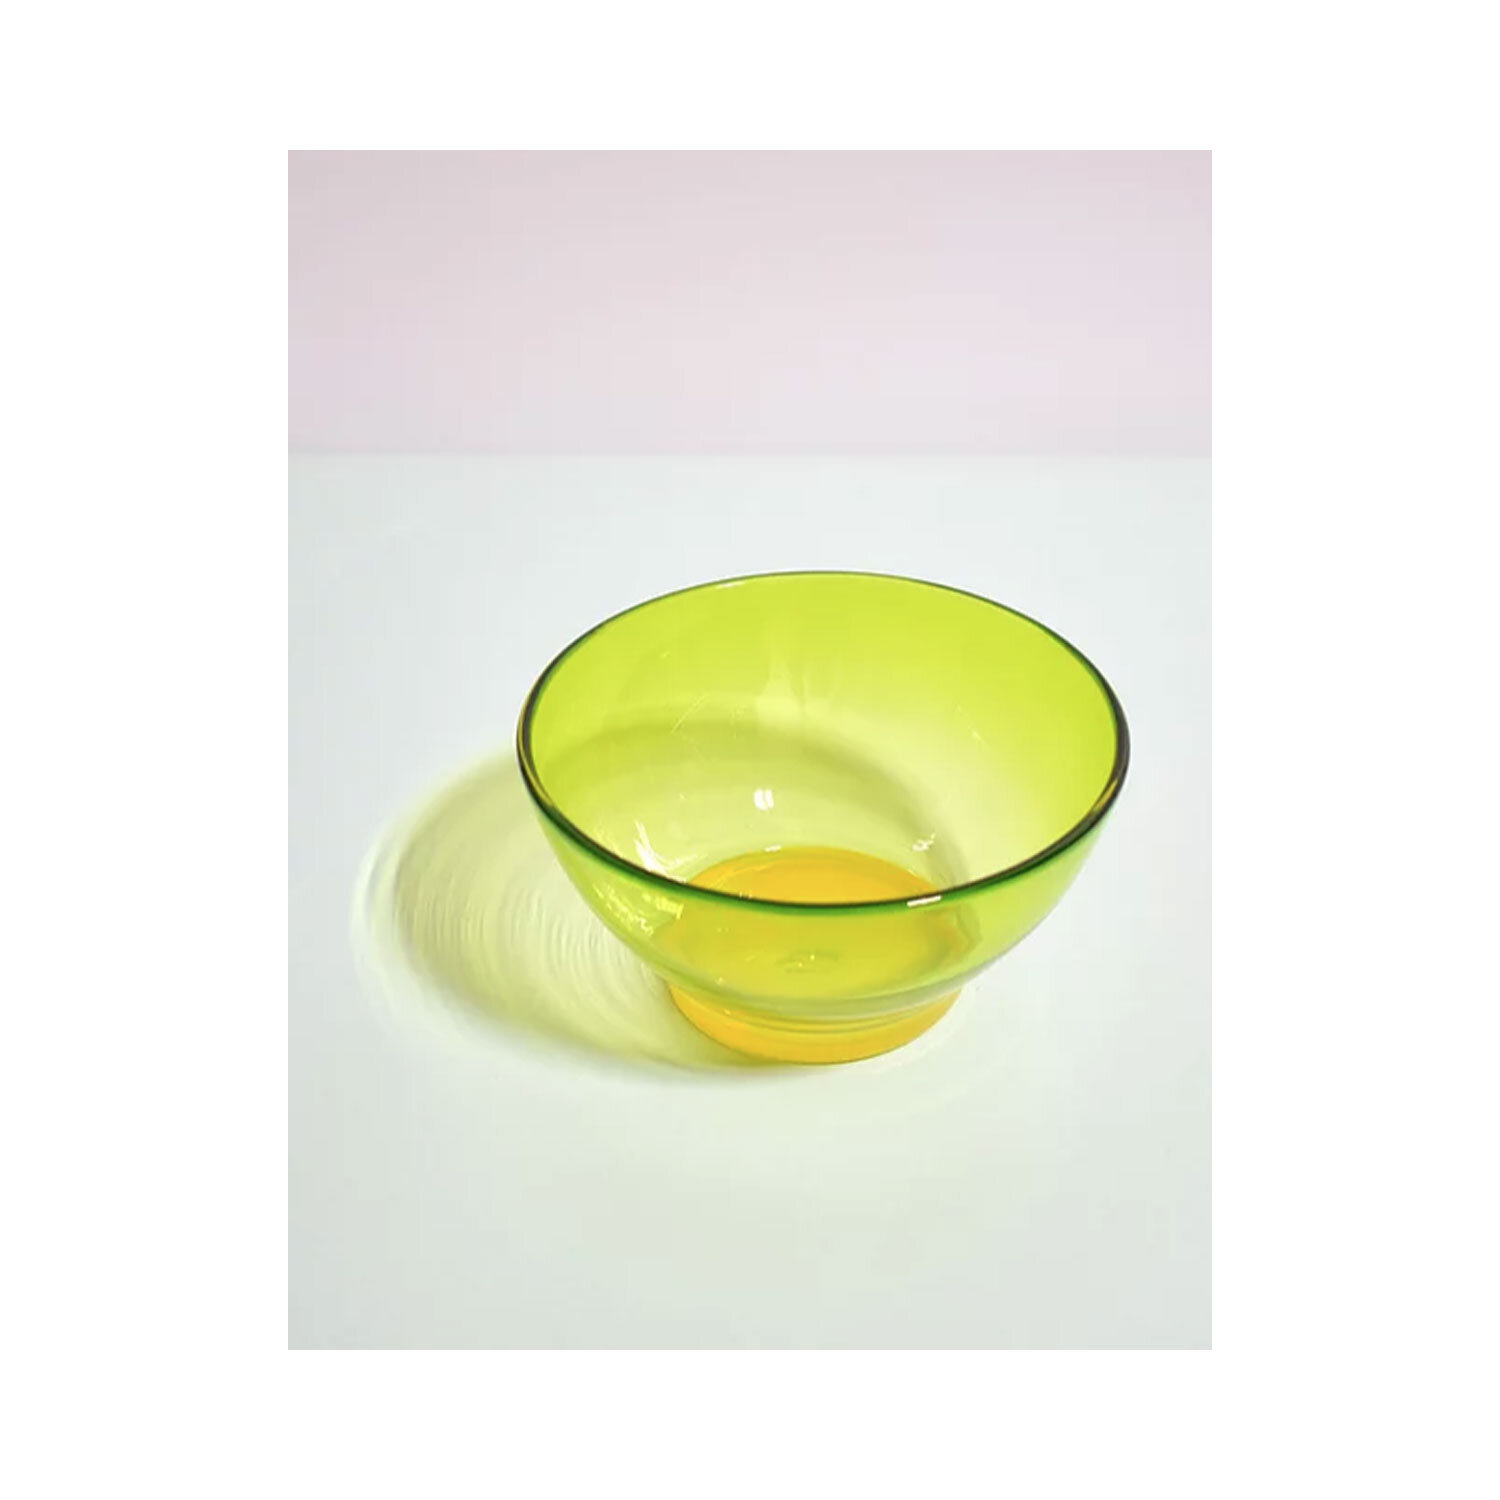 Chartreuse Gelatin Bowl by Maria Enomoto